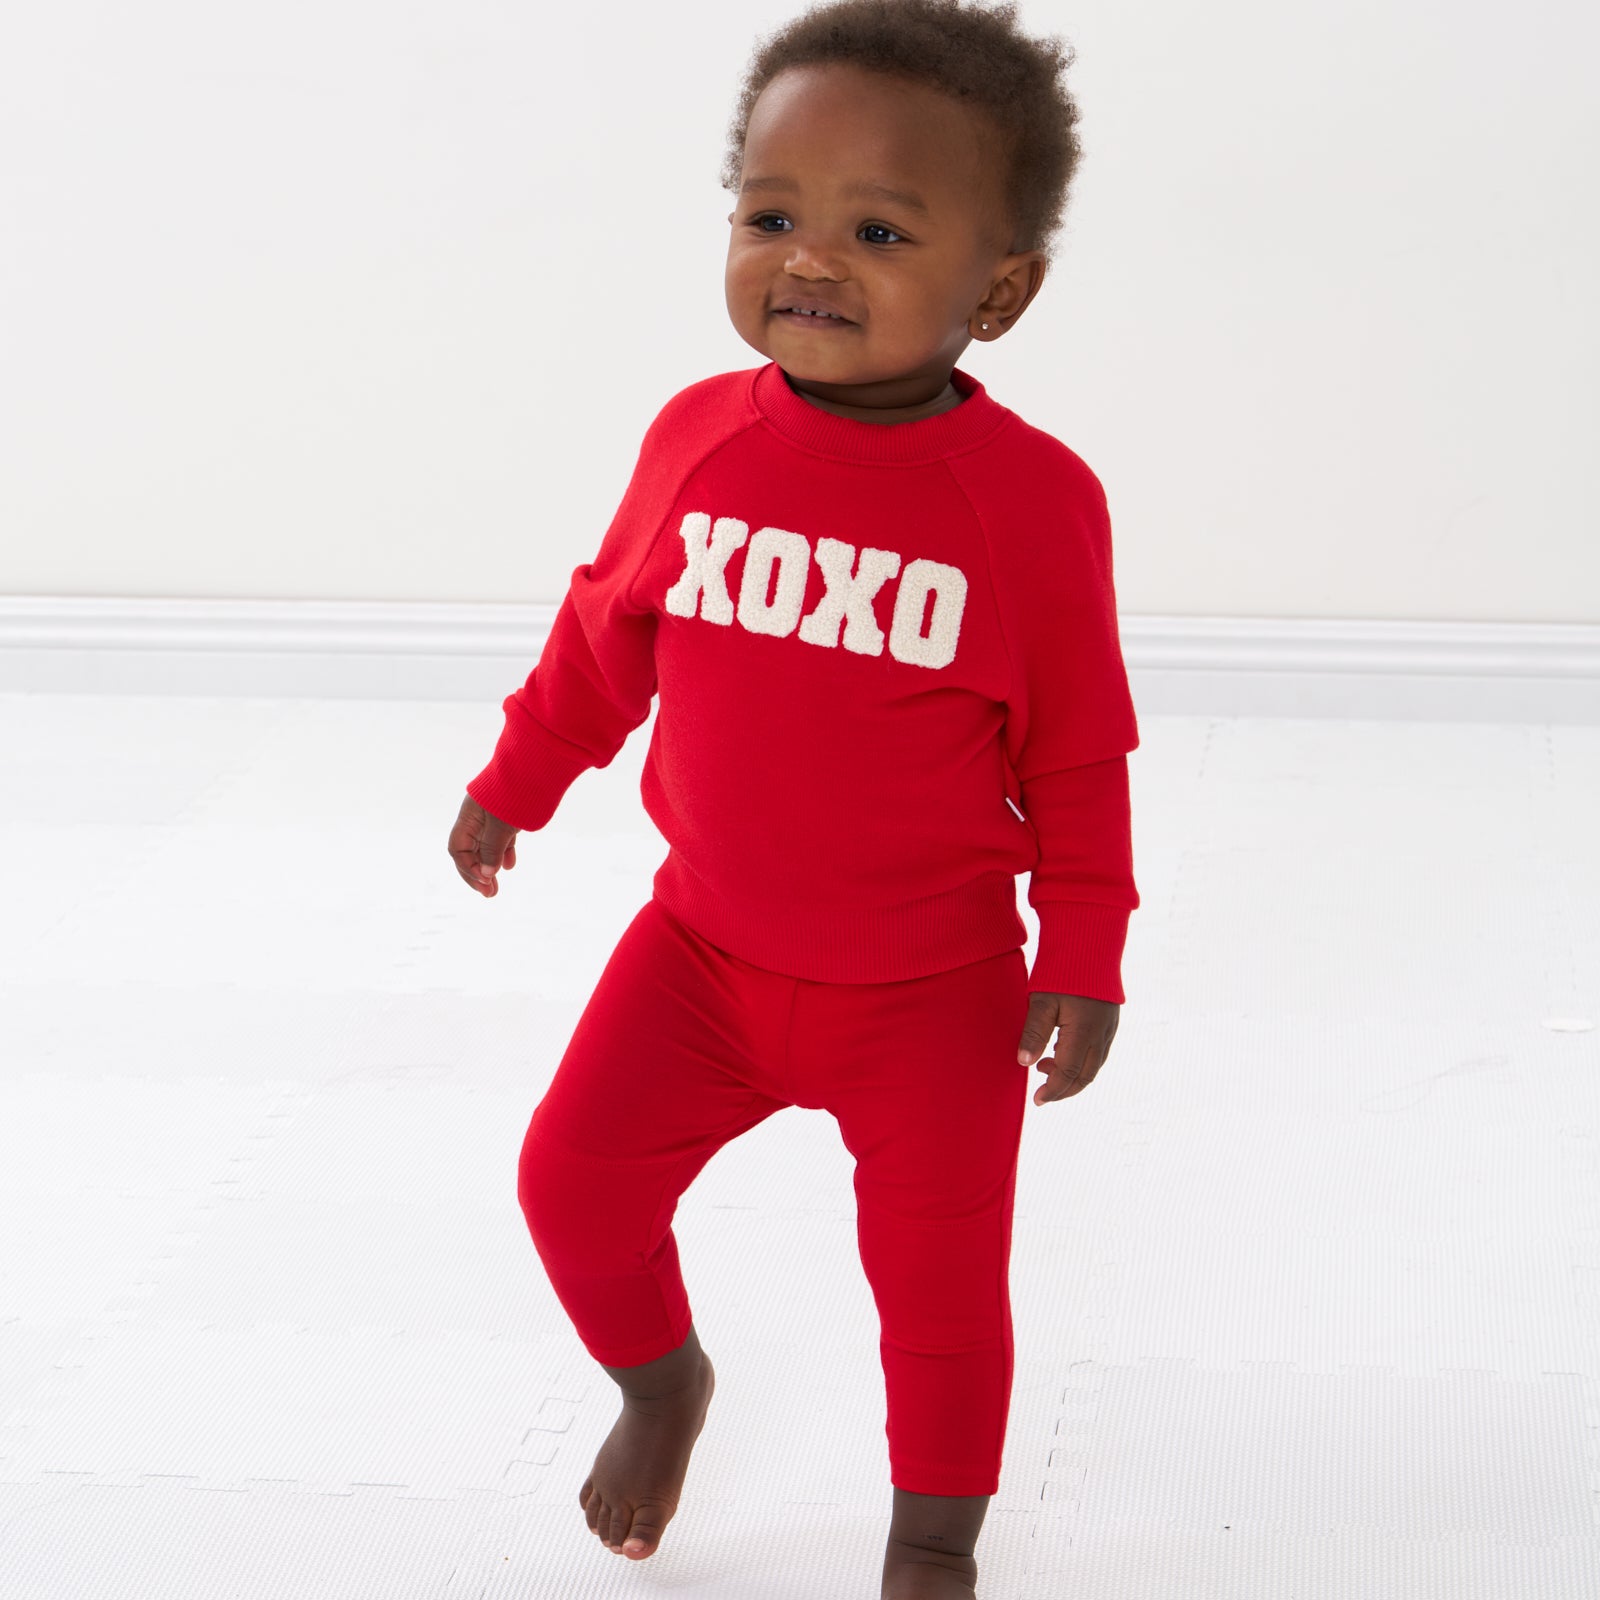 Child wearing Candy Red leggings and matching crewneck sweatshirt